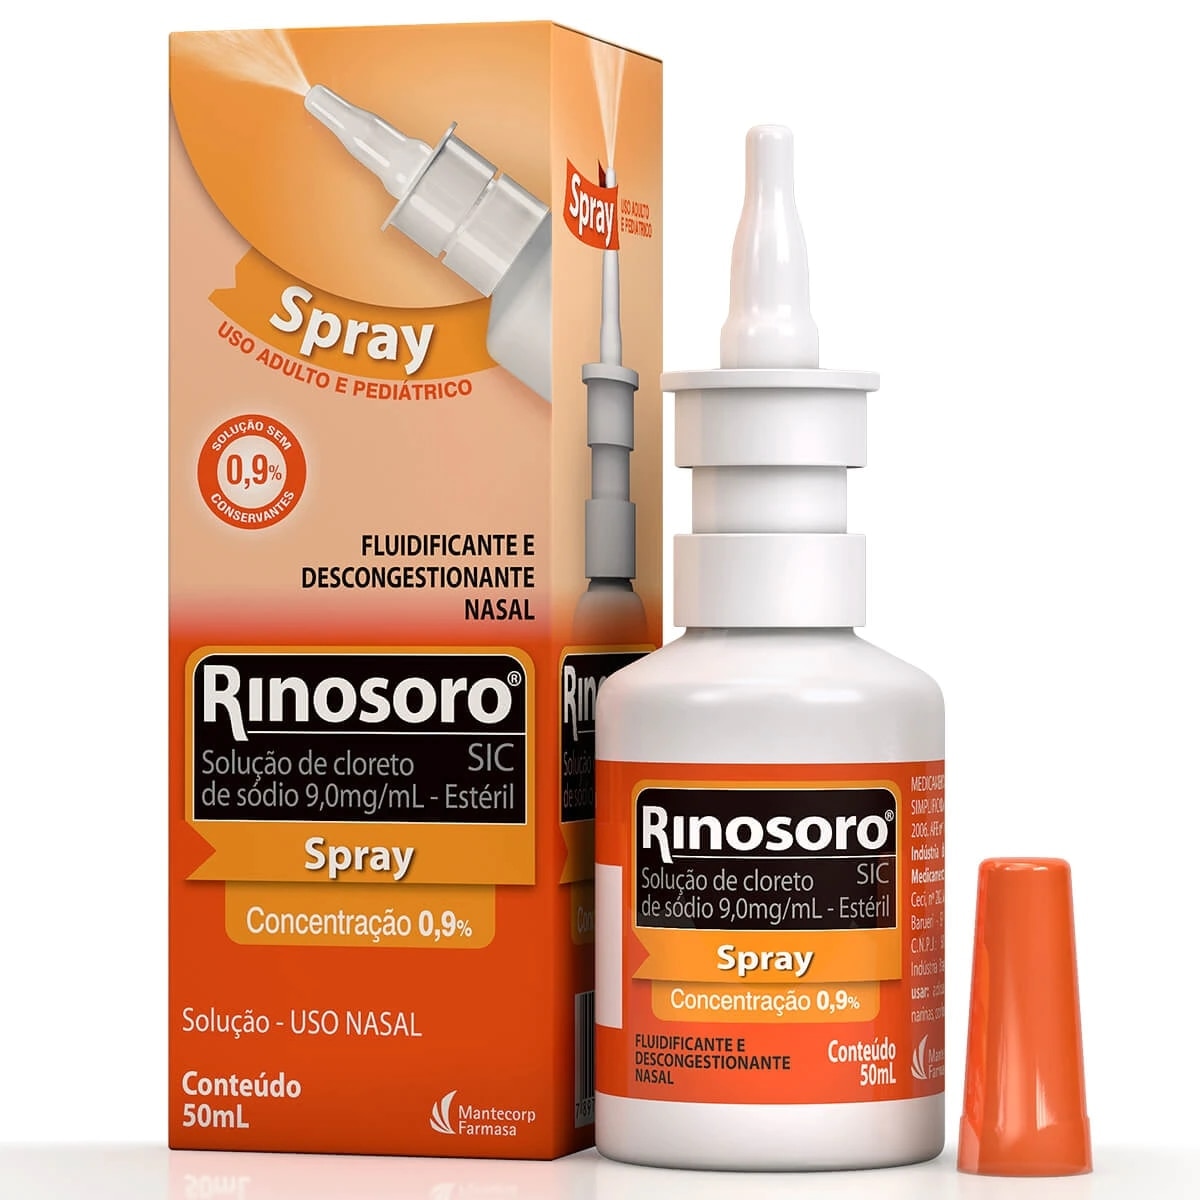 Rinosoro Sic 0,9% Descongestionante Spray Nasal 50ml